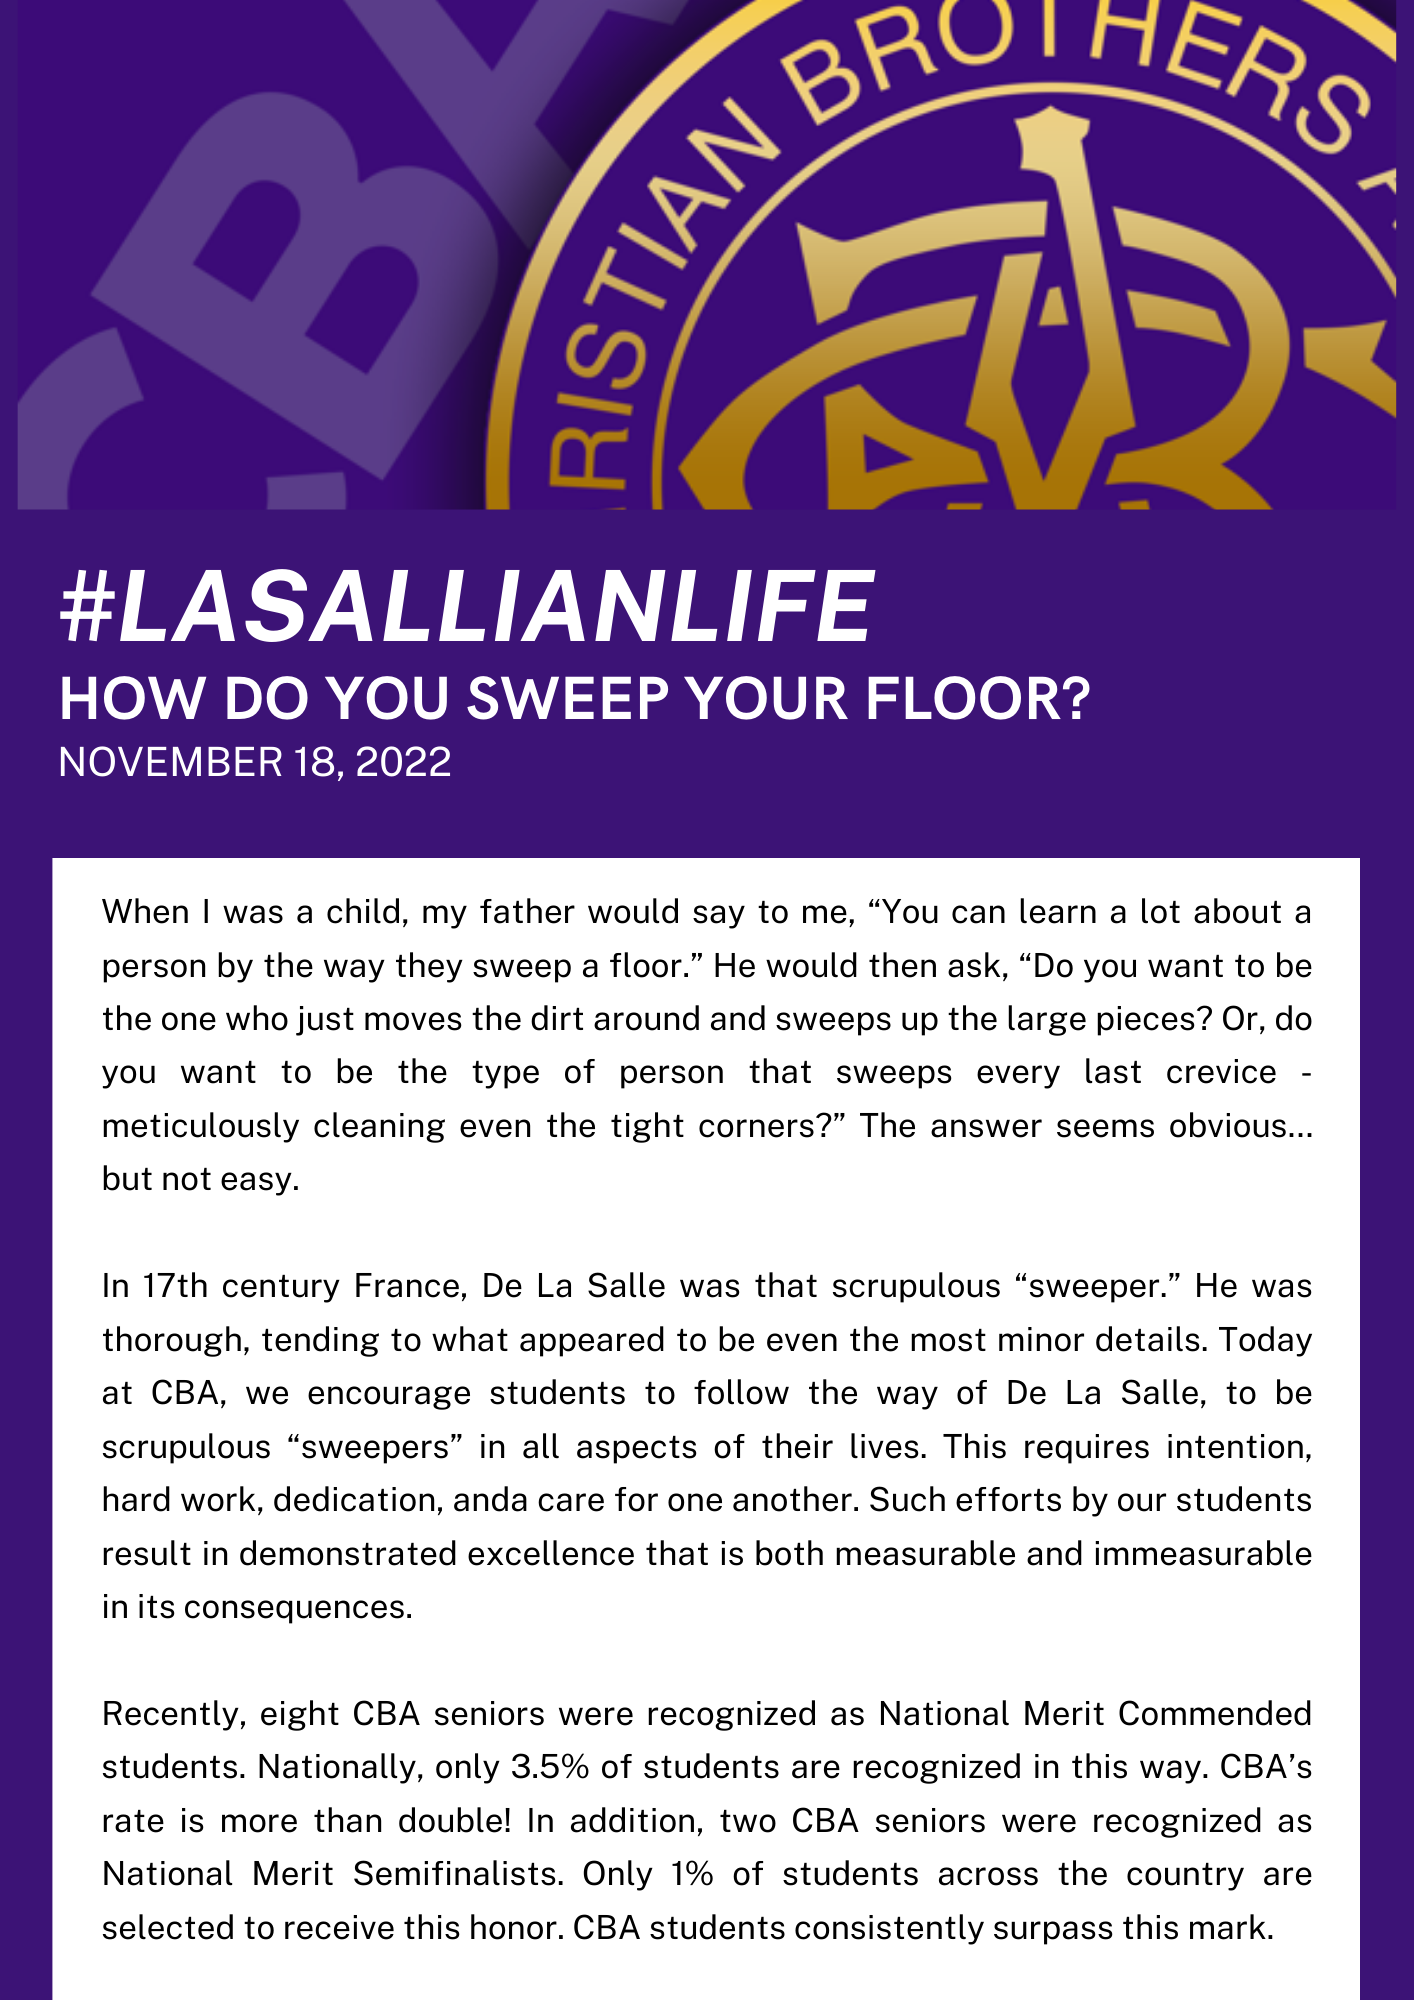 how do you sweep the floor near syracuse ny image of lasallian life poster